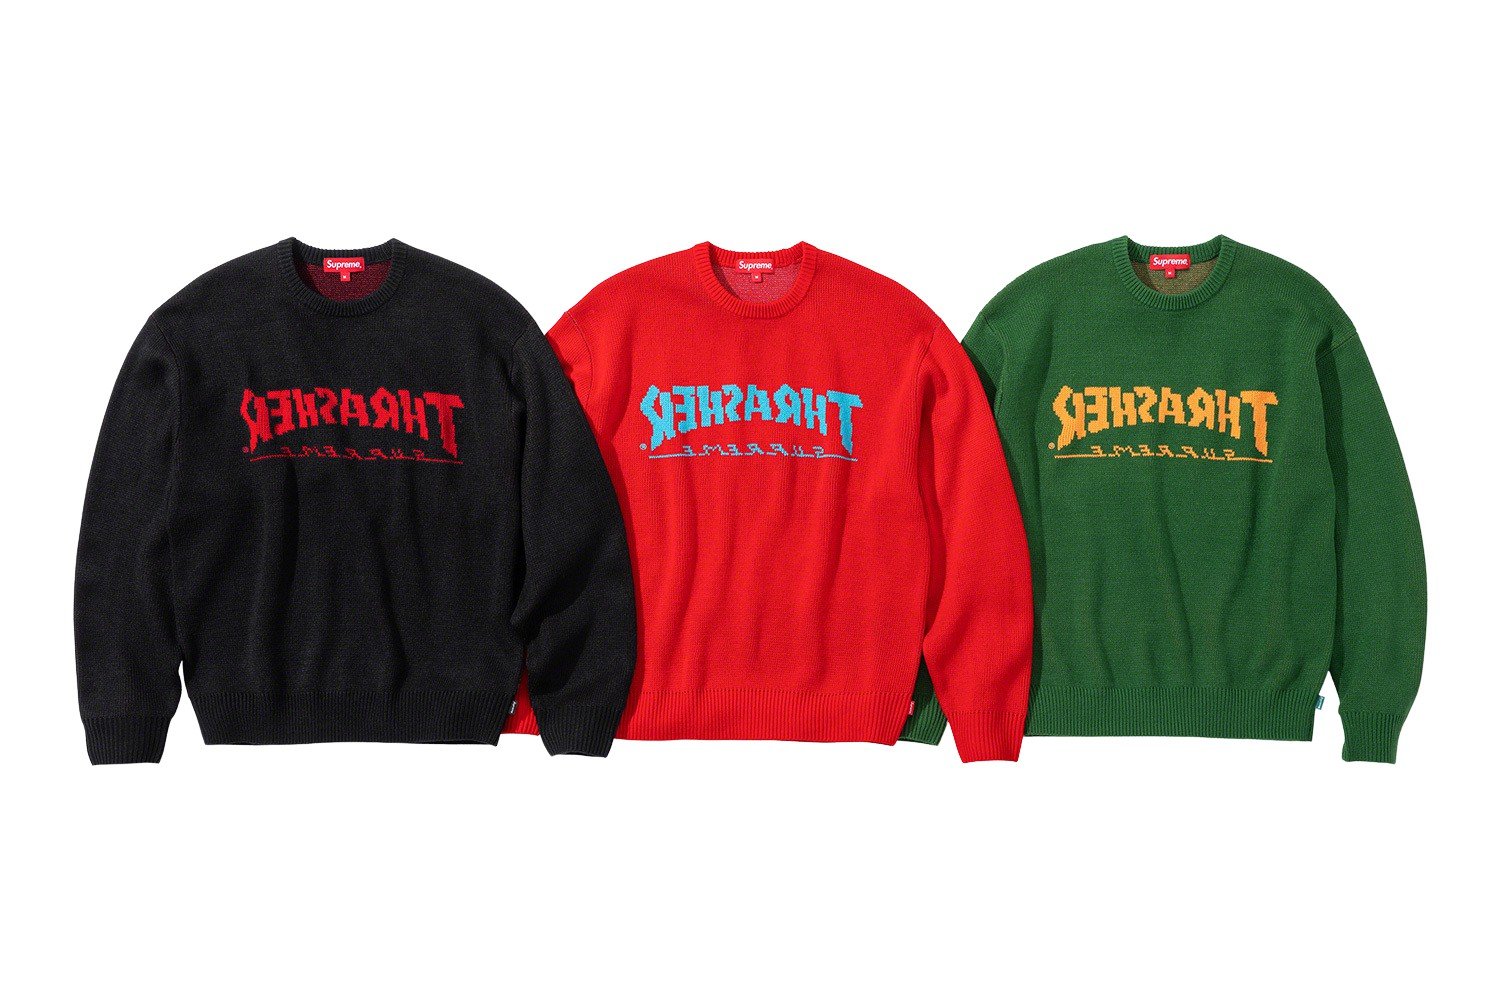 Supreme Thrasher sweater Lサイズ